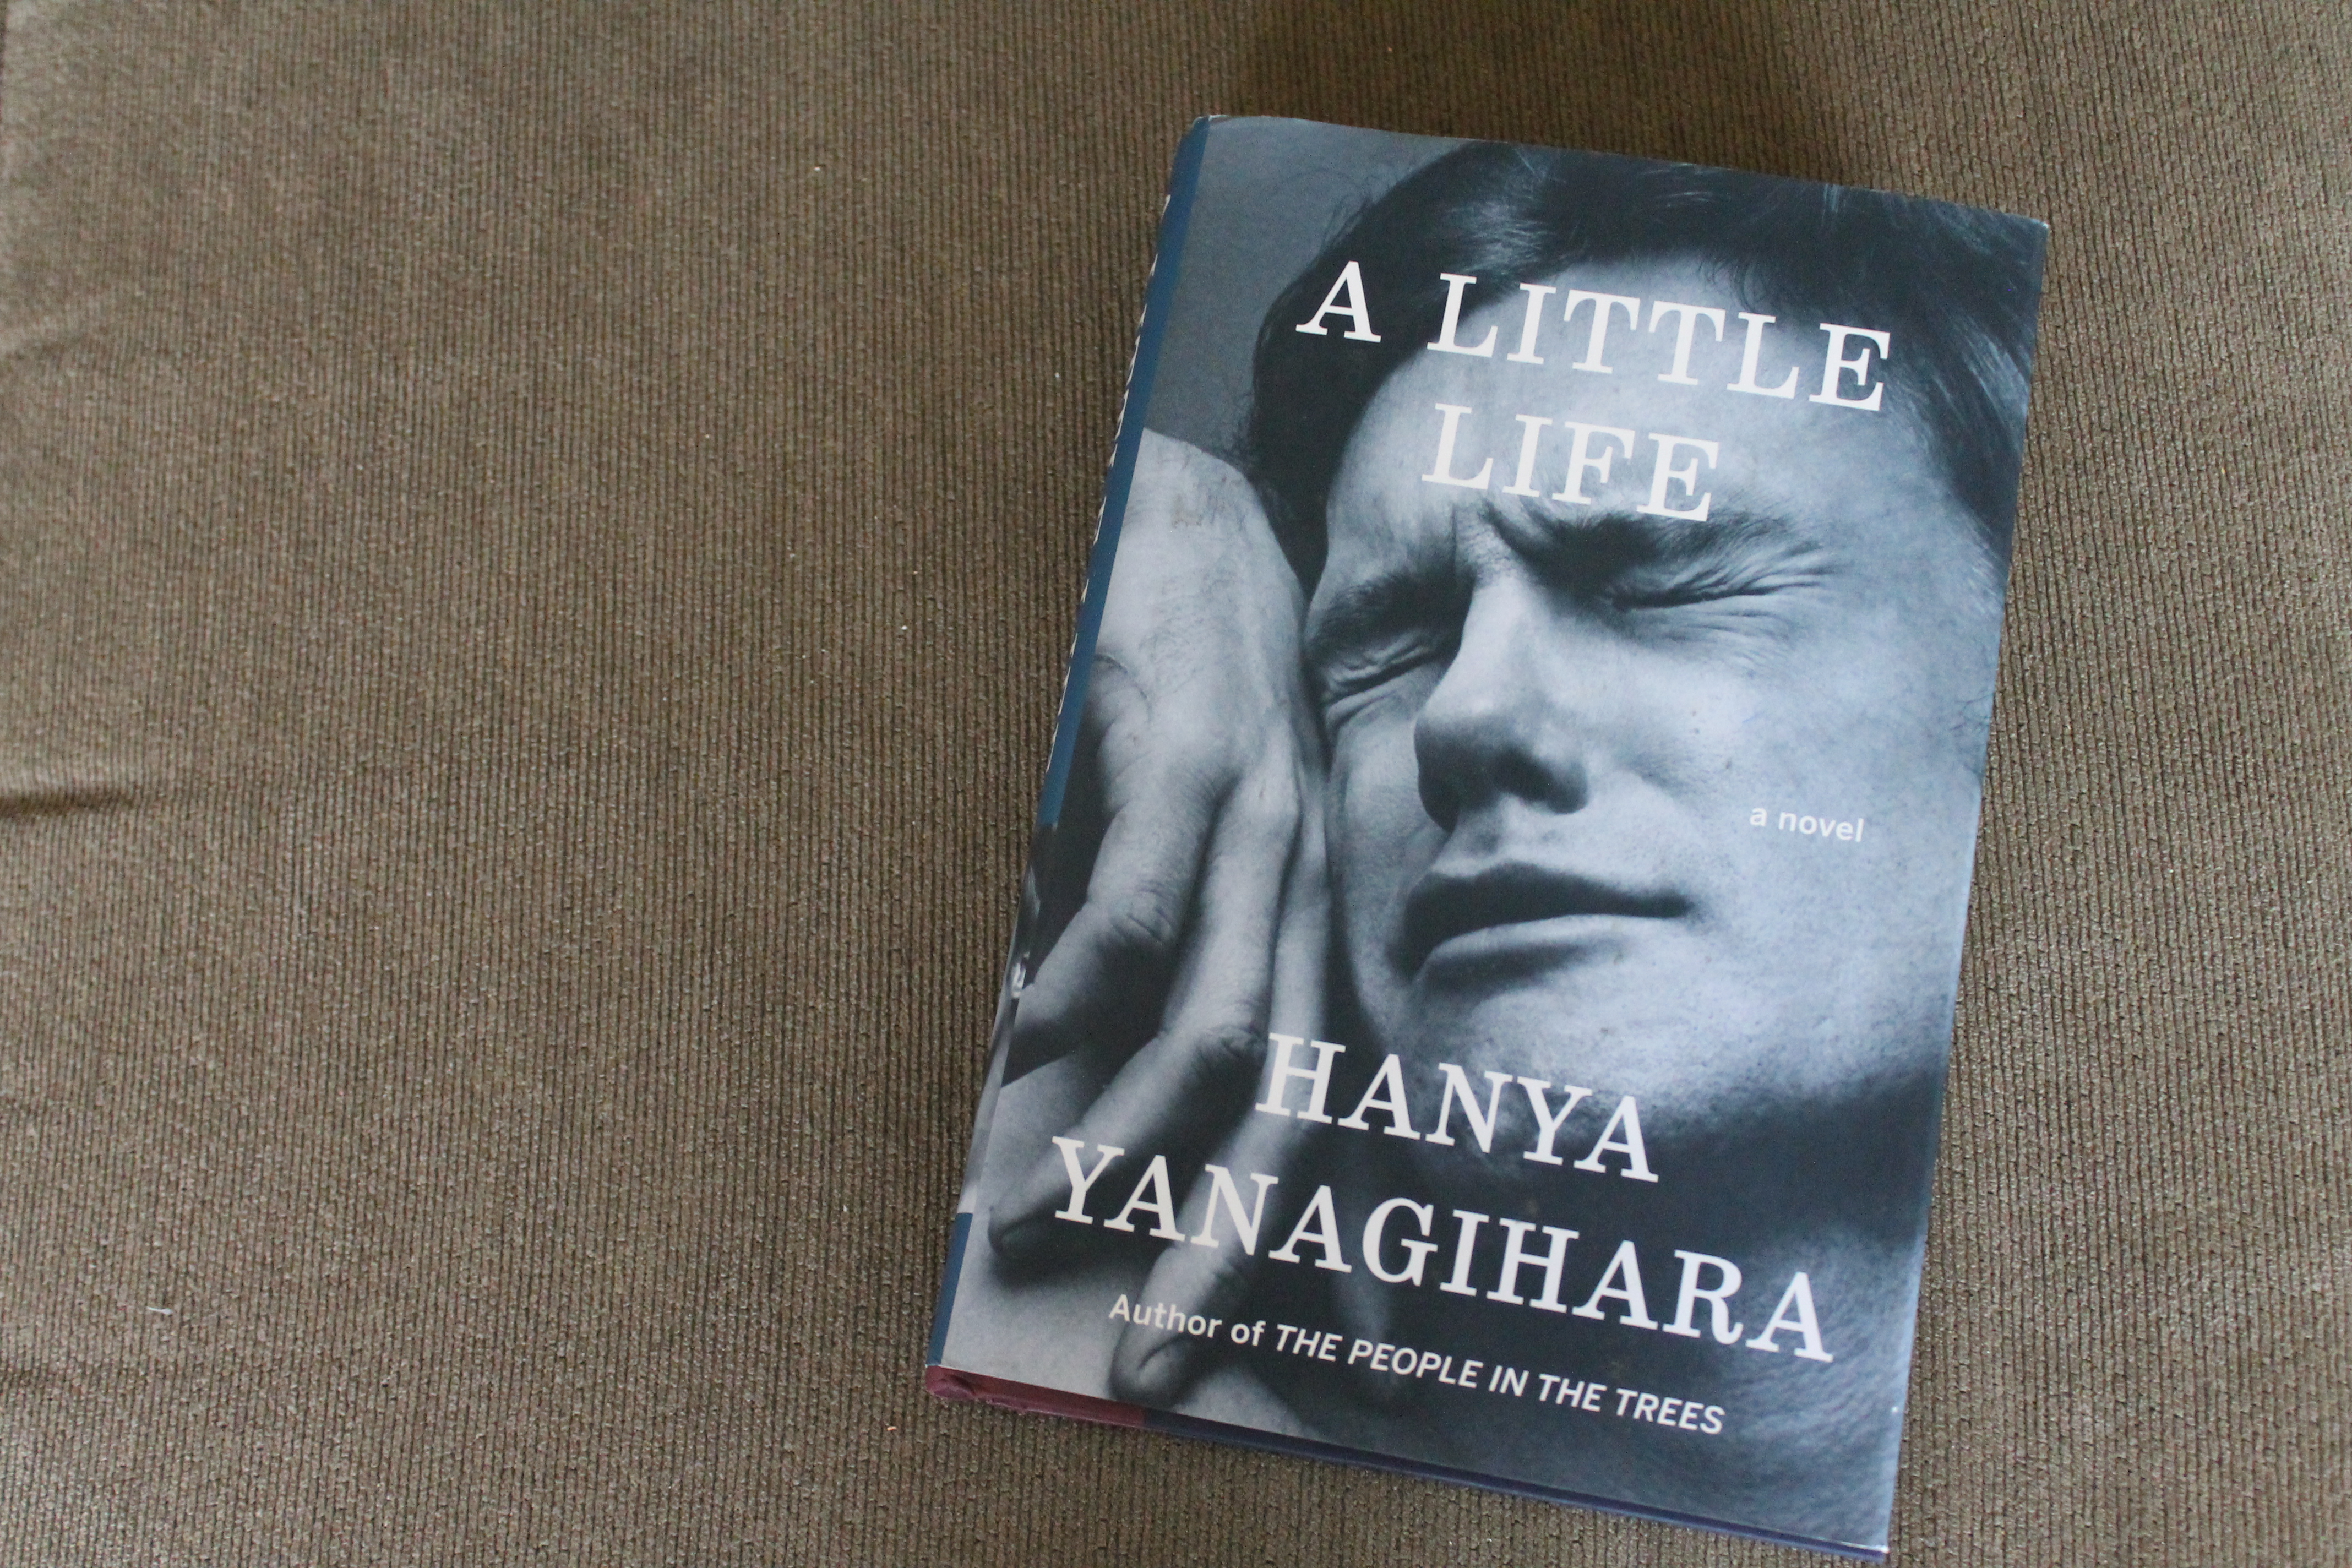 A little Life hanya Yanagihara. Little life book